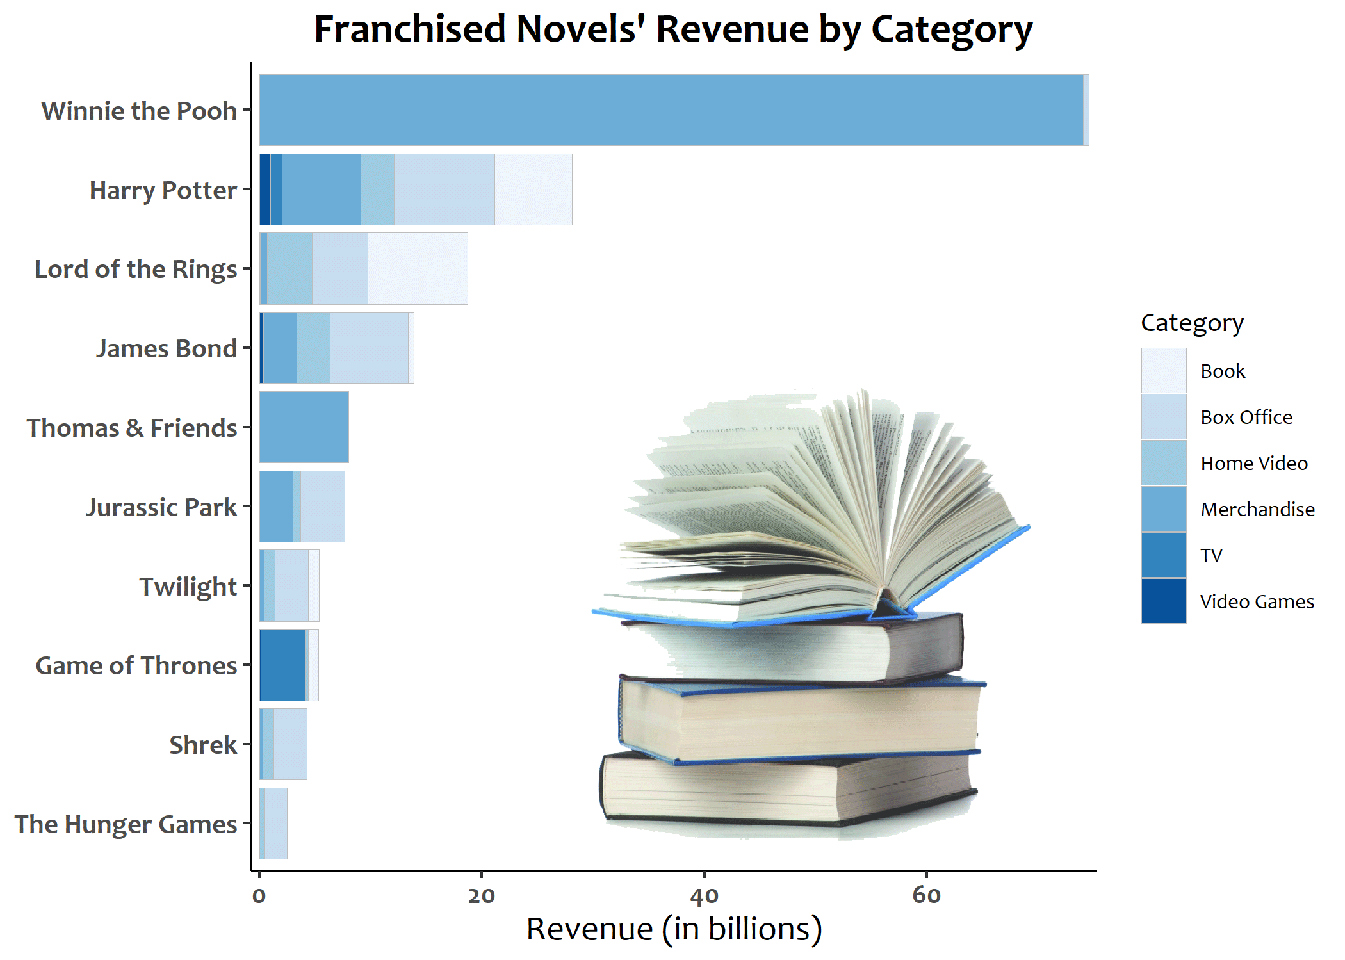 Revenue for franchised novels